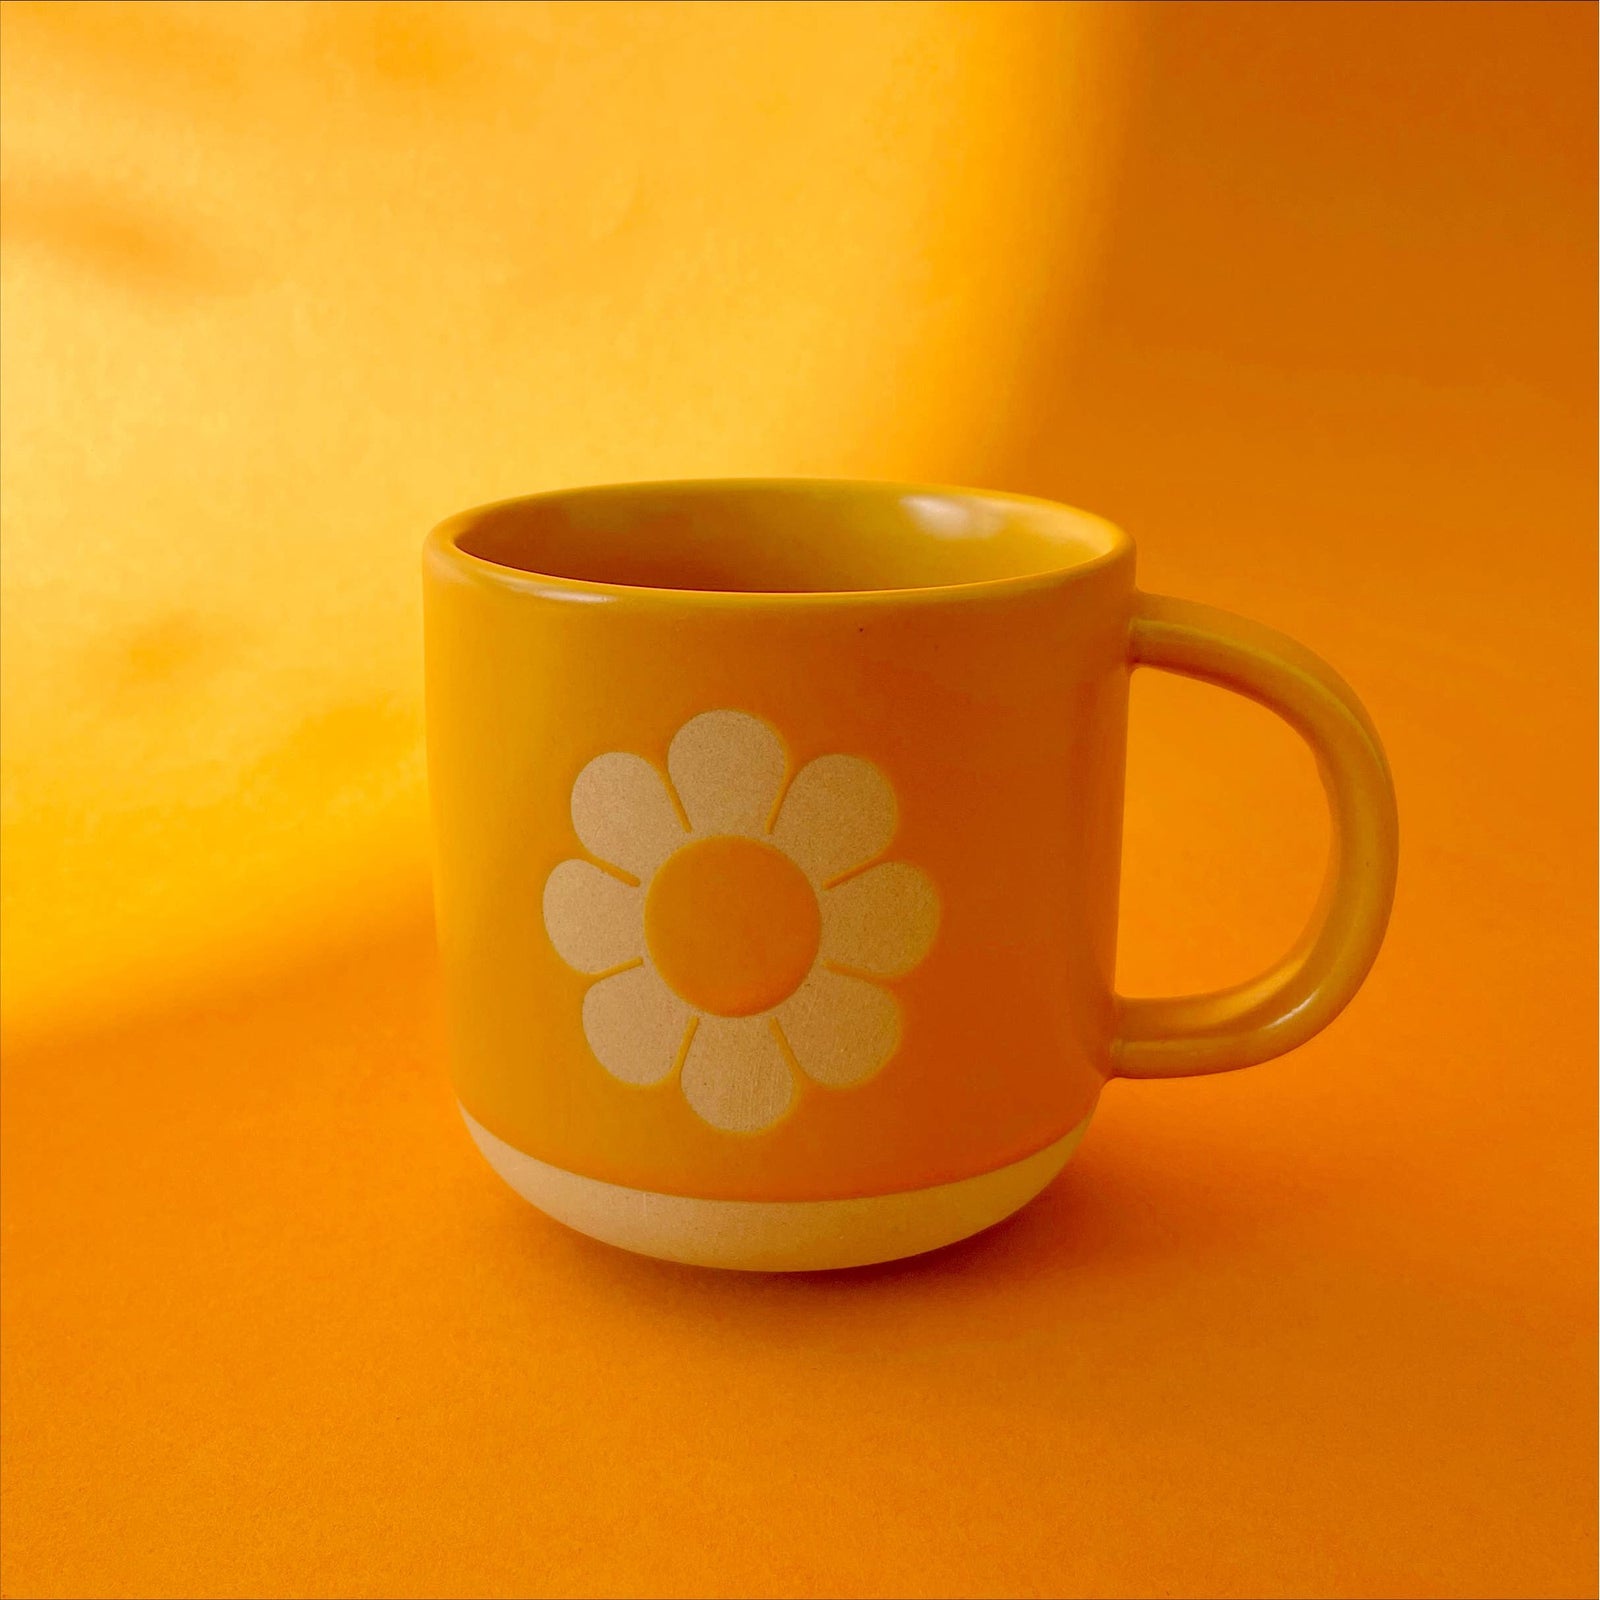 Retro Flower Ceramic Mug | Groovy '70s Themed Floral Mug in Sunshine Orange-Yellow